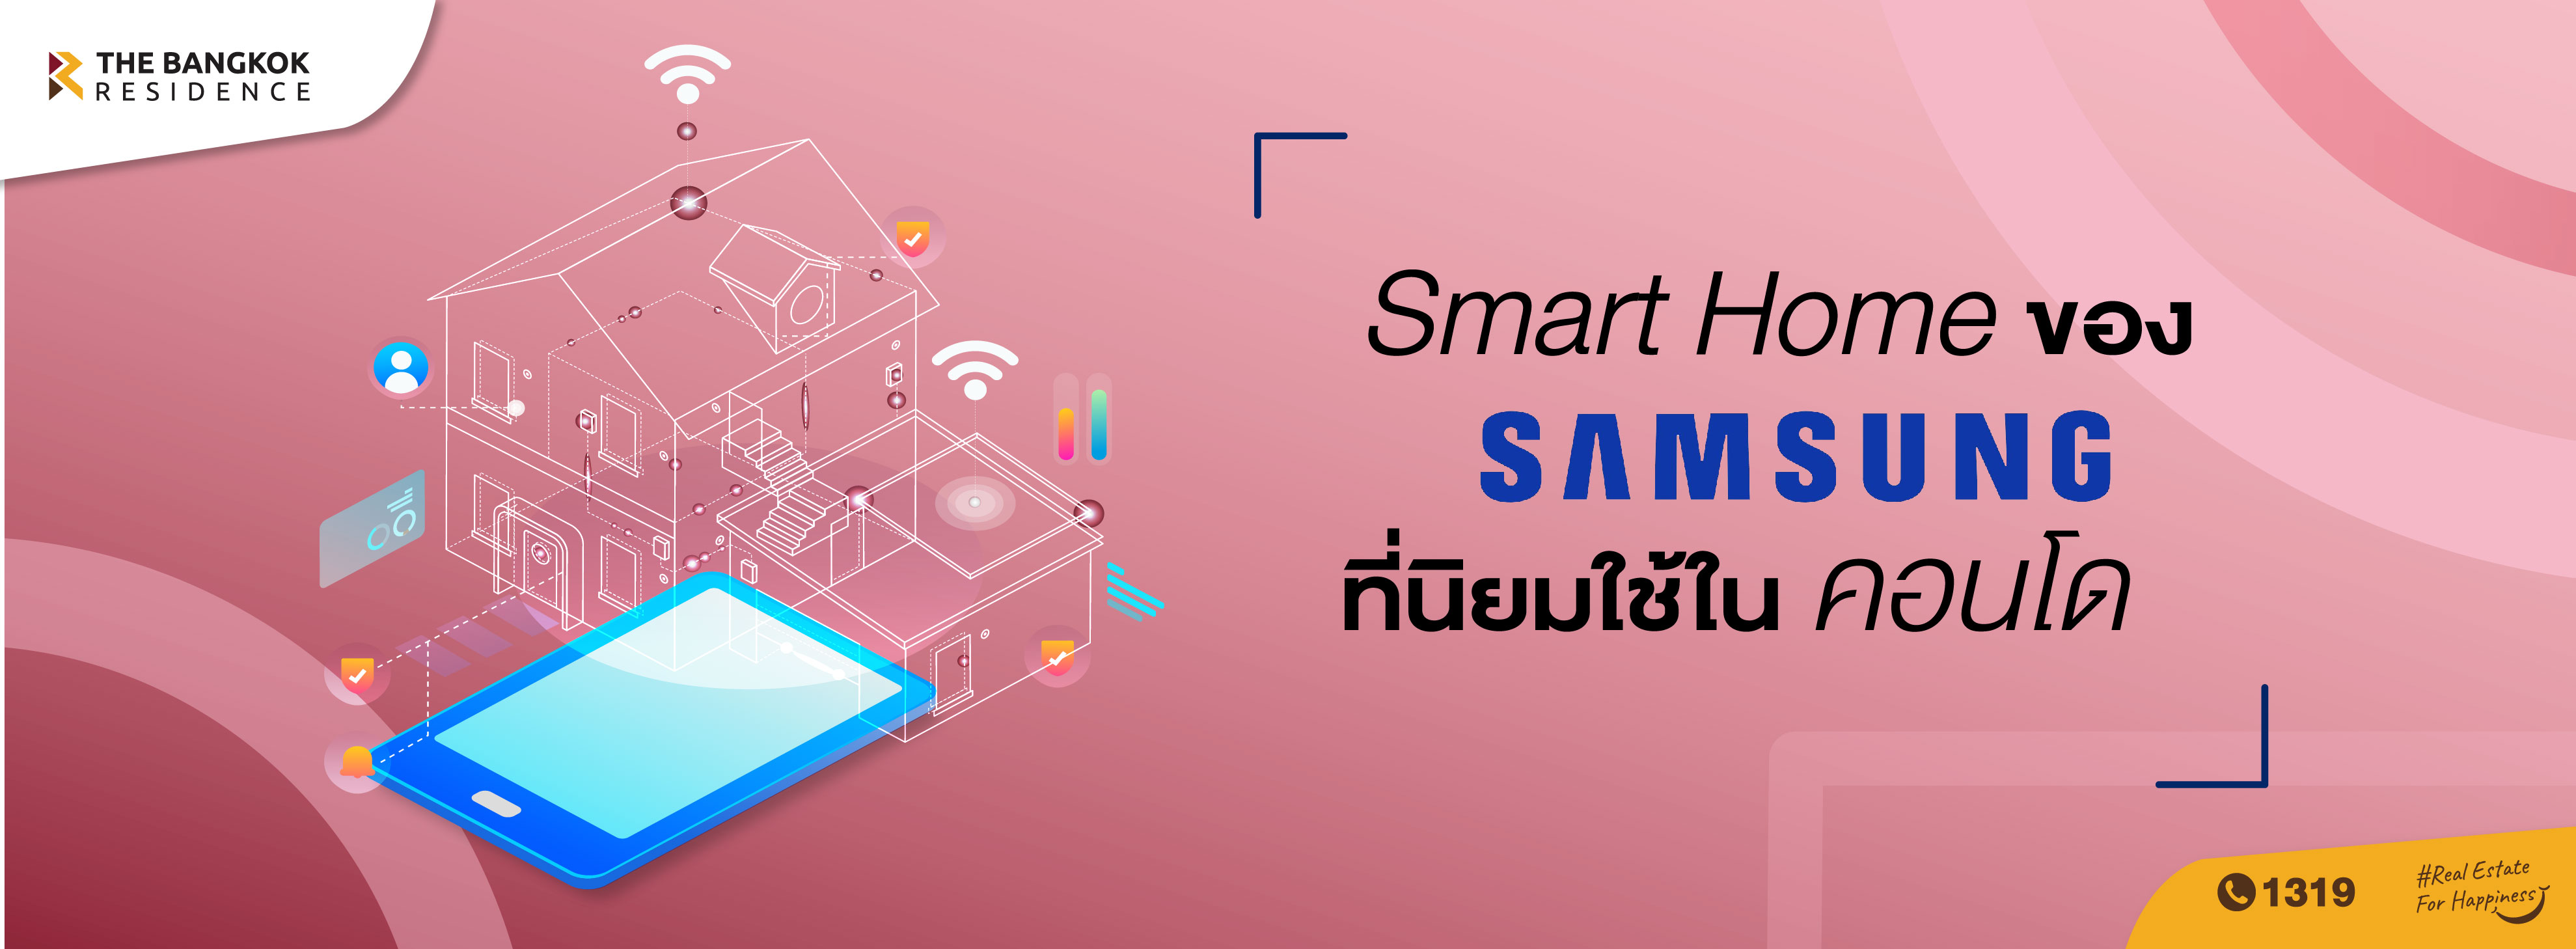 Smart Home ของ Samsung ที่นิยมใช้ในคอนโด 